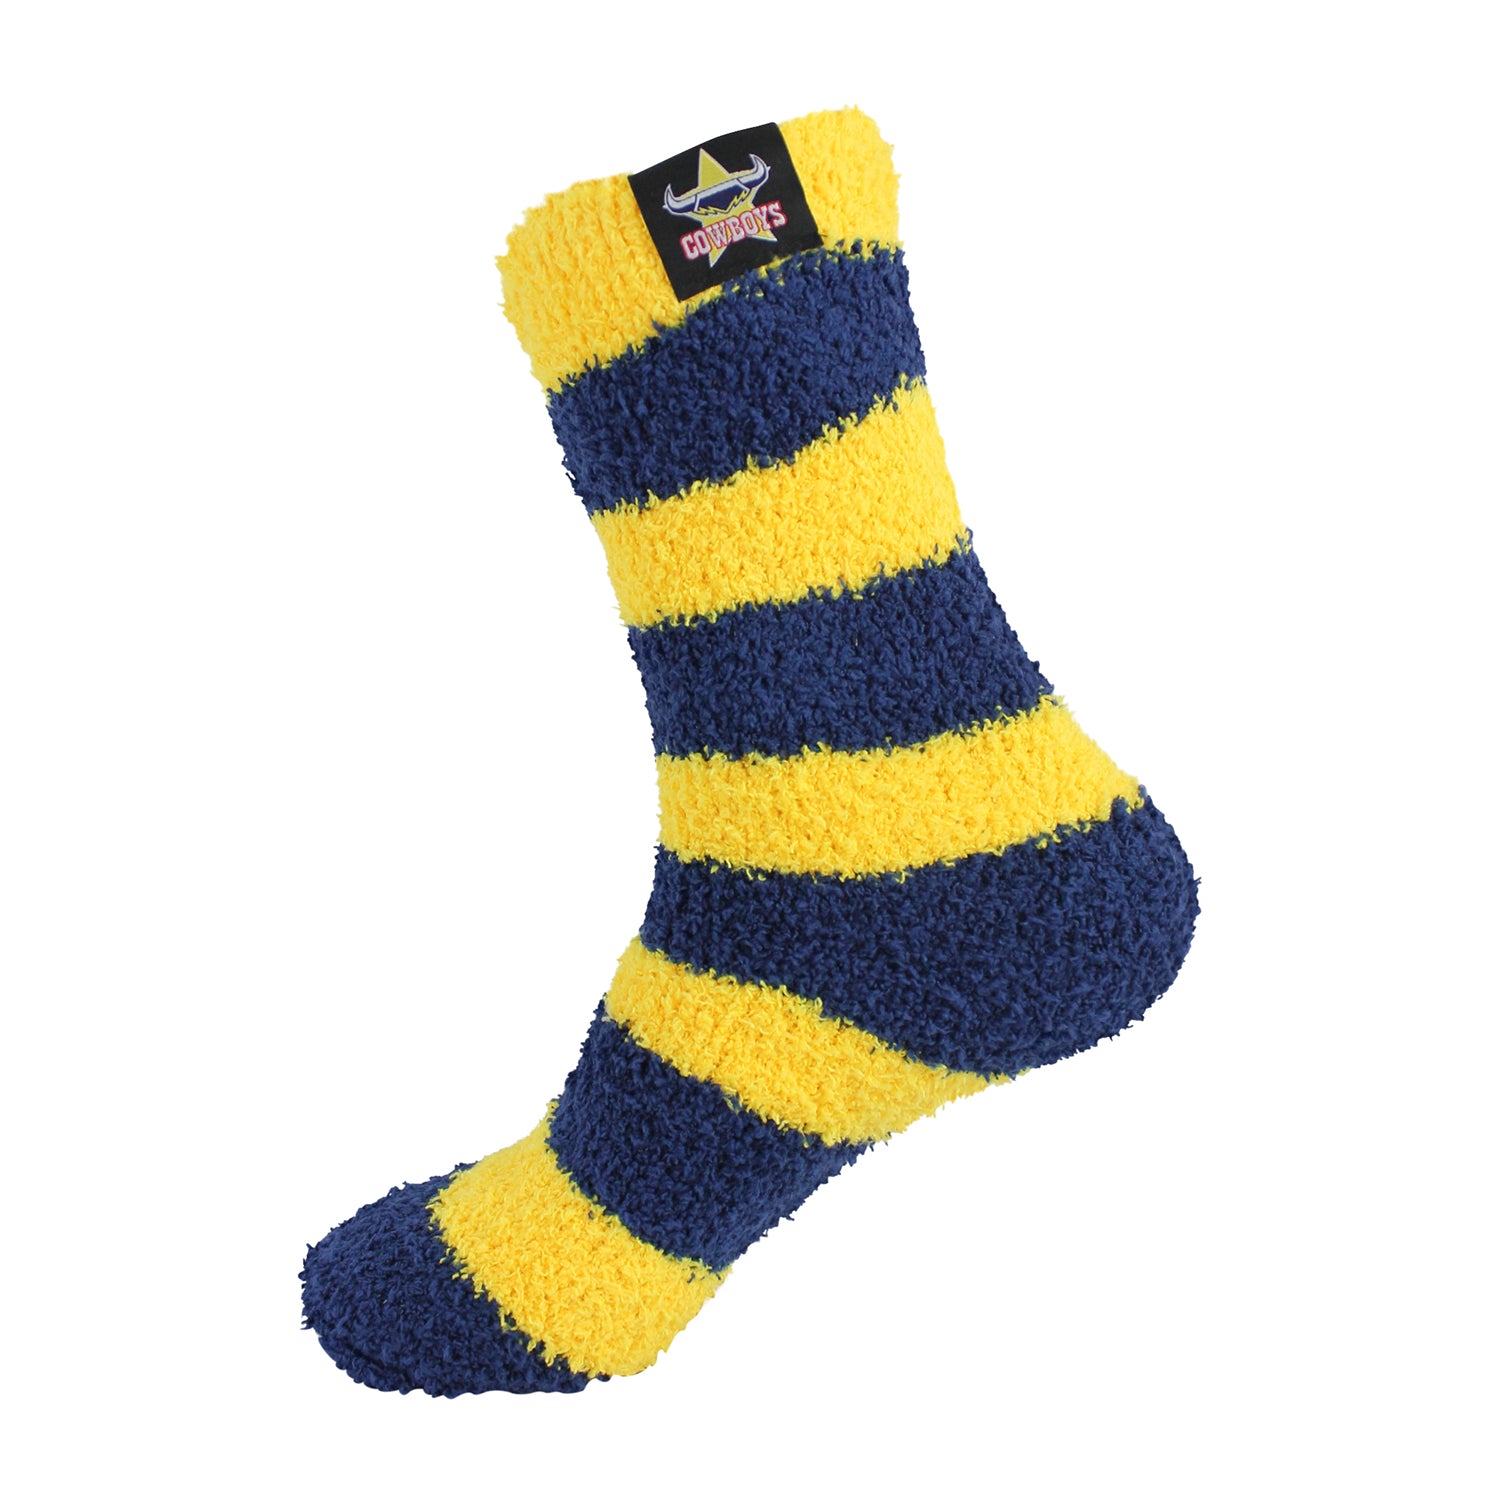 NRL North Queensland Cowboys 2Pk Bed Socks